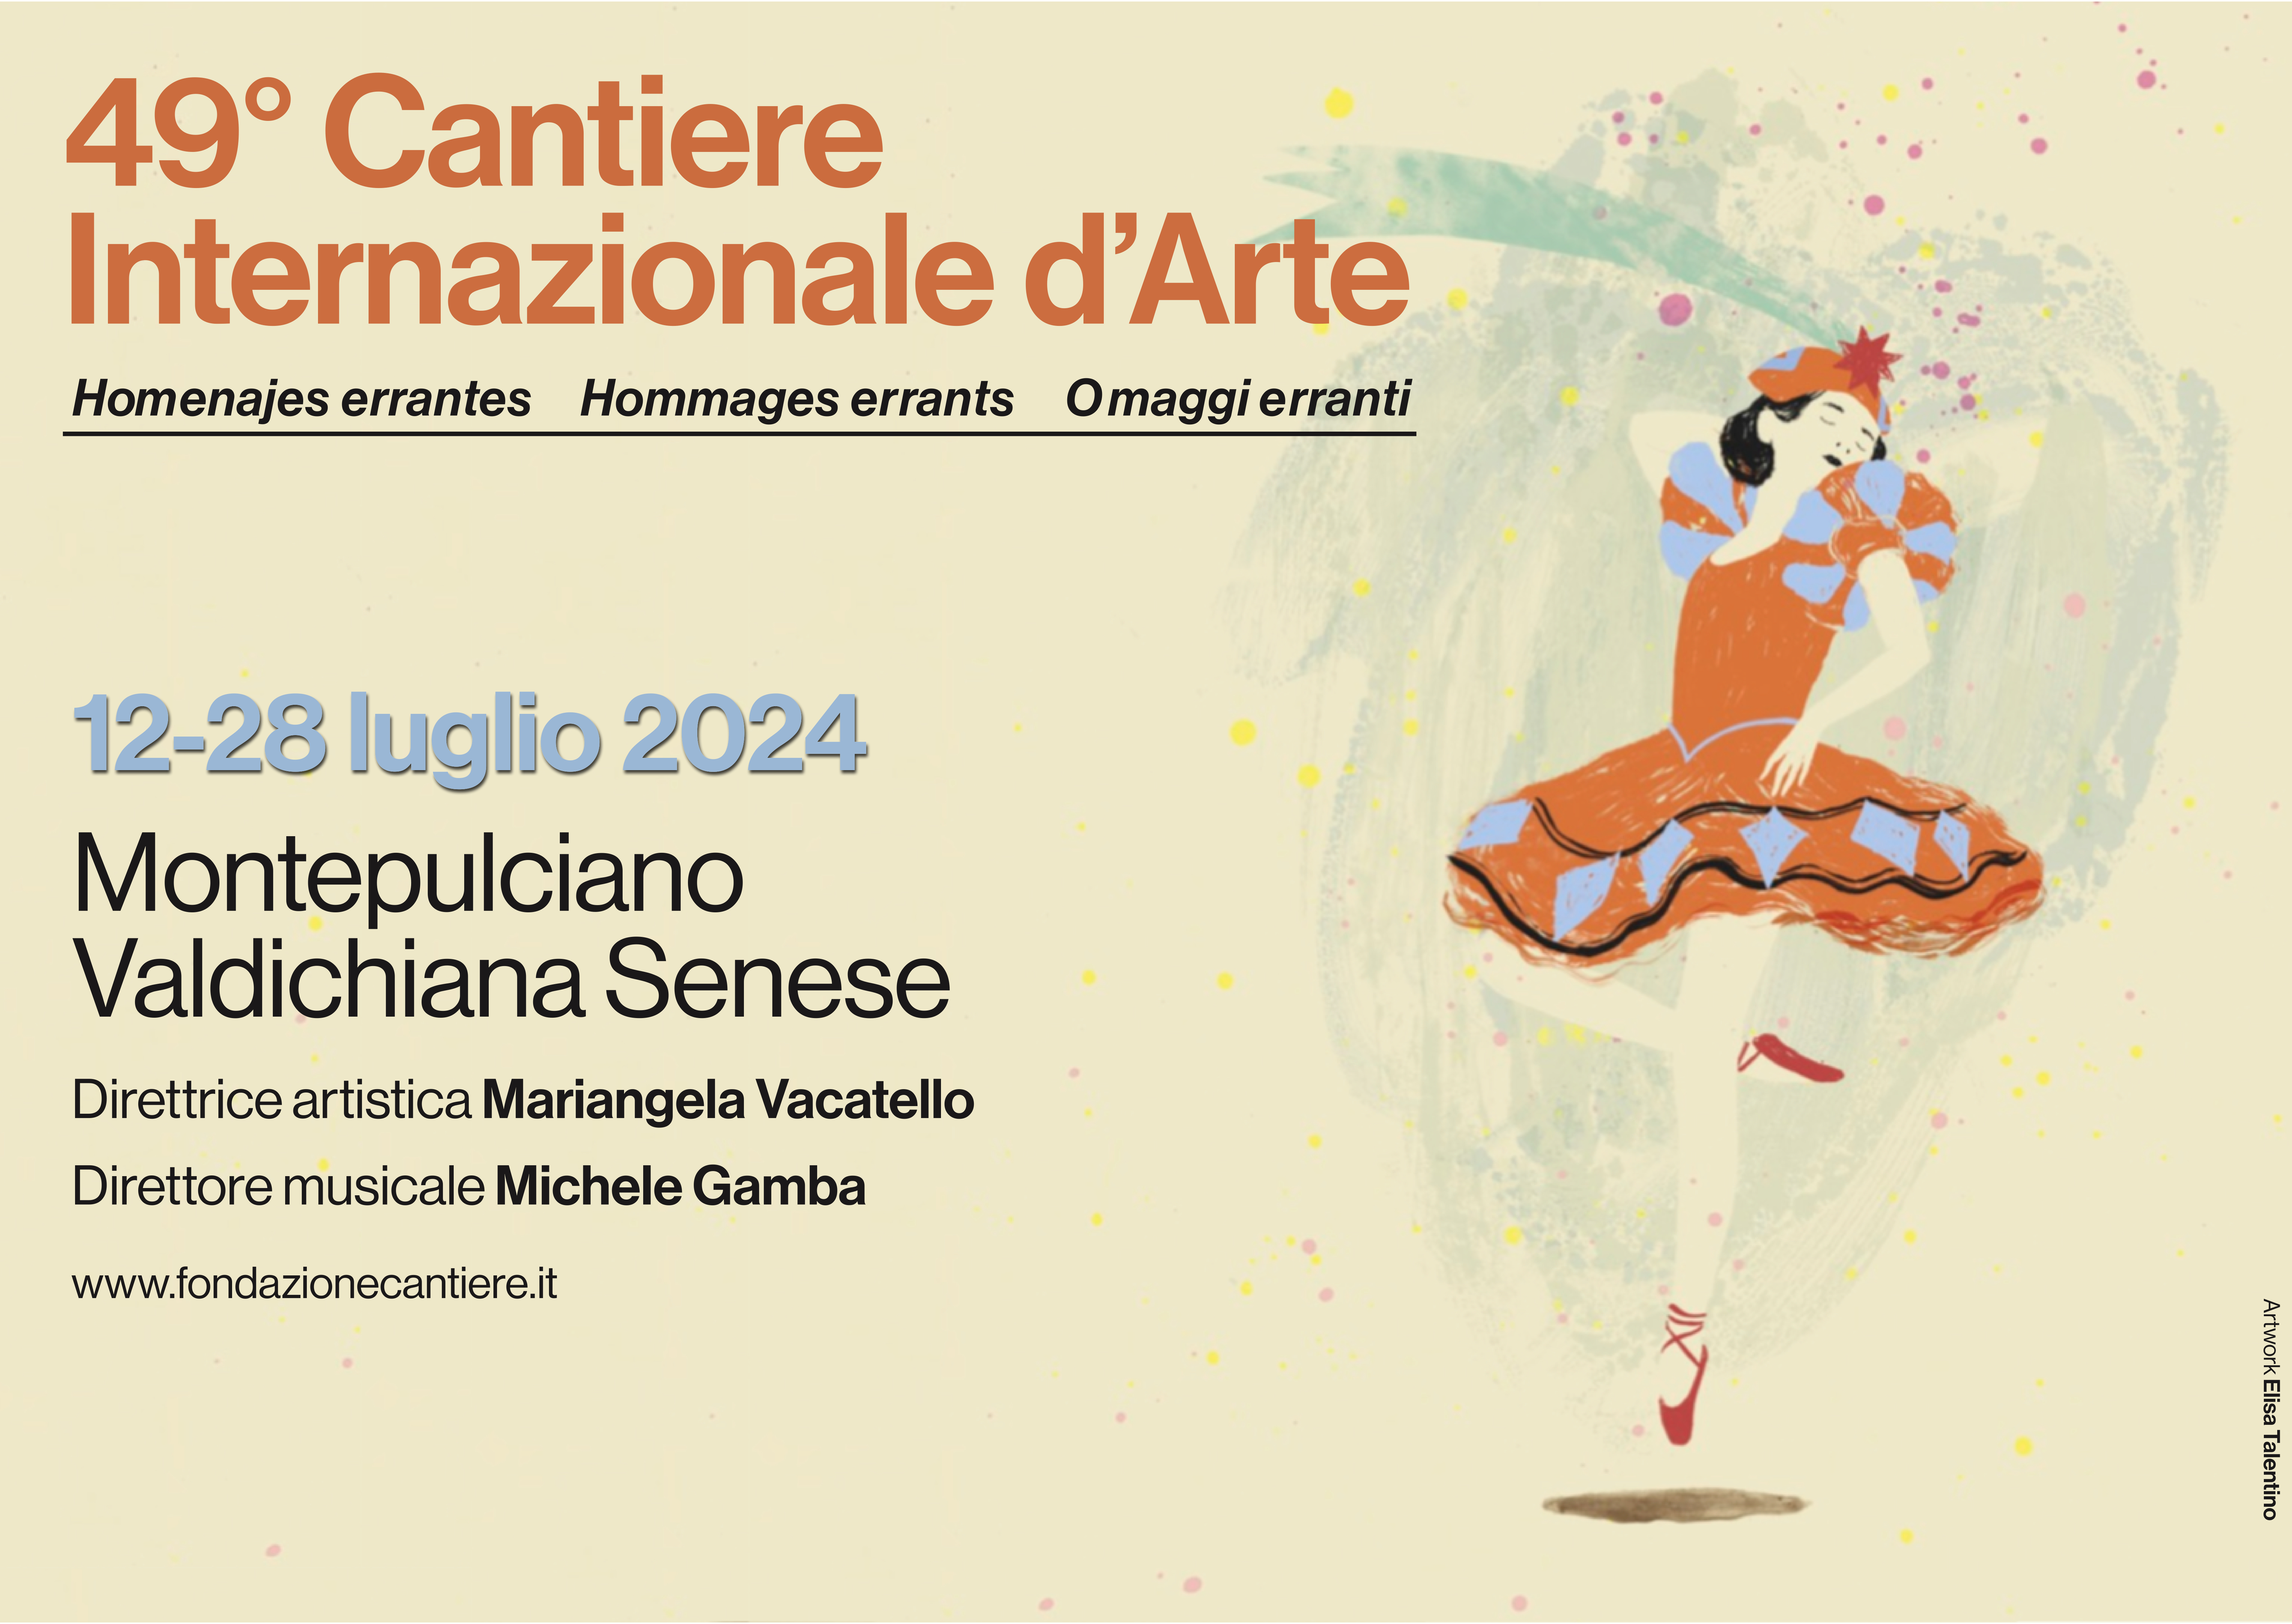 49° Cantiere Internazionale d'Arte - Music, Thatre, Dance, and more in Montepulciano and Valdichiana